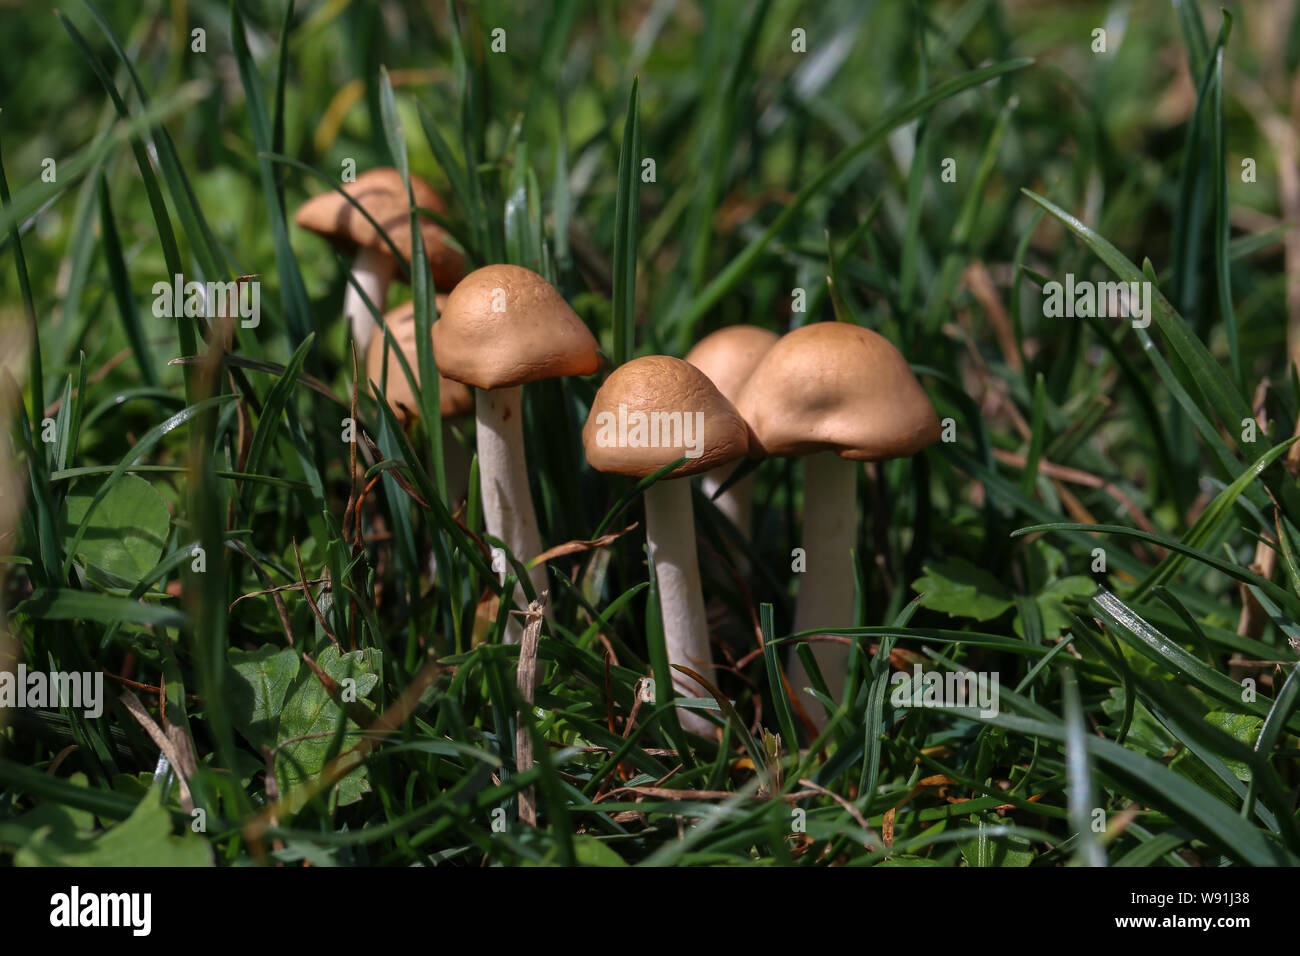 Pilze. Kleine Pilze wuchsen auf grünen Rasen. Stockfoto